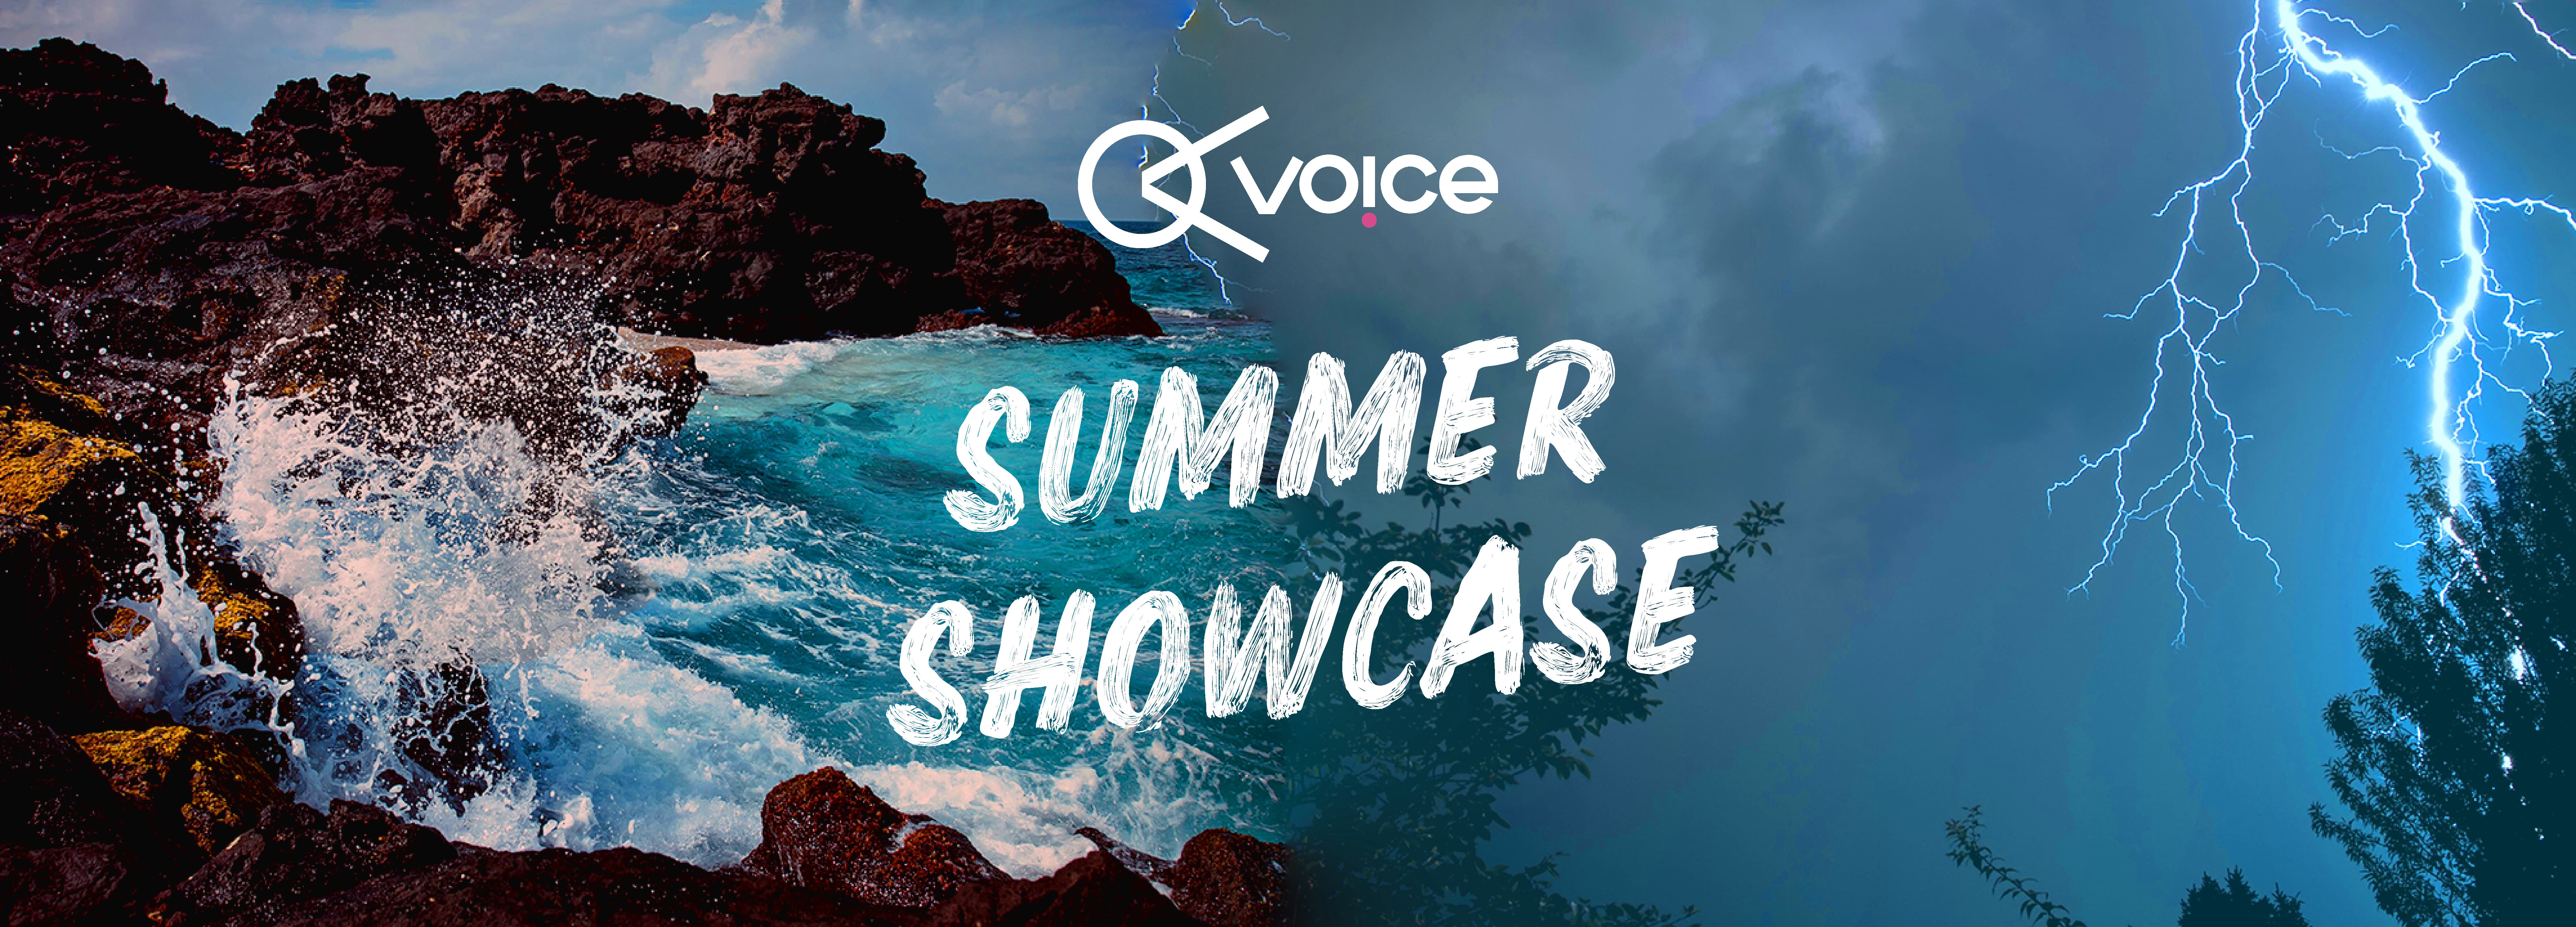 Voice summer showcase banner, showing crashing waves and lightning storm